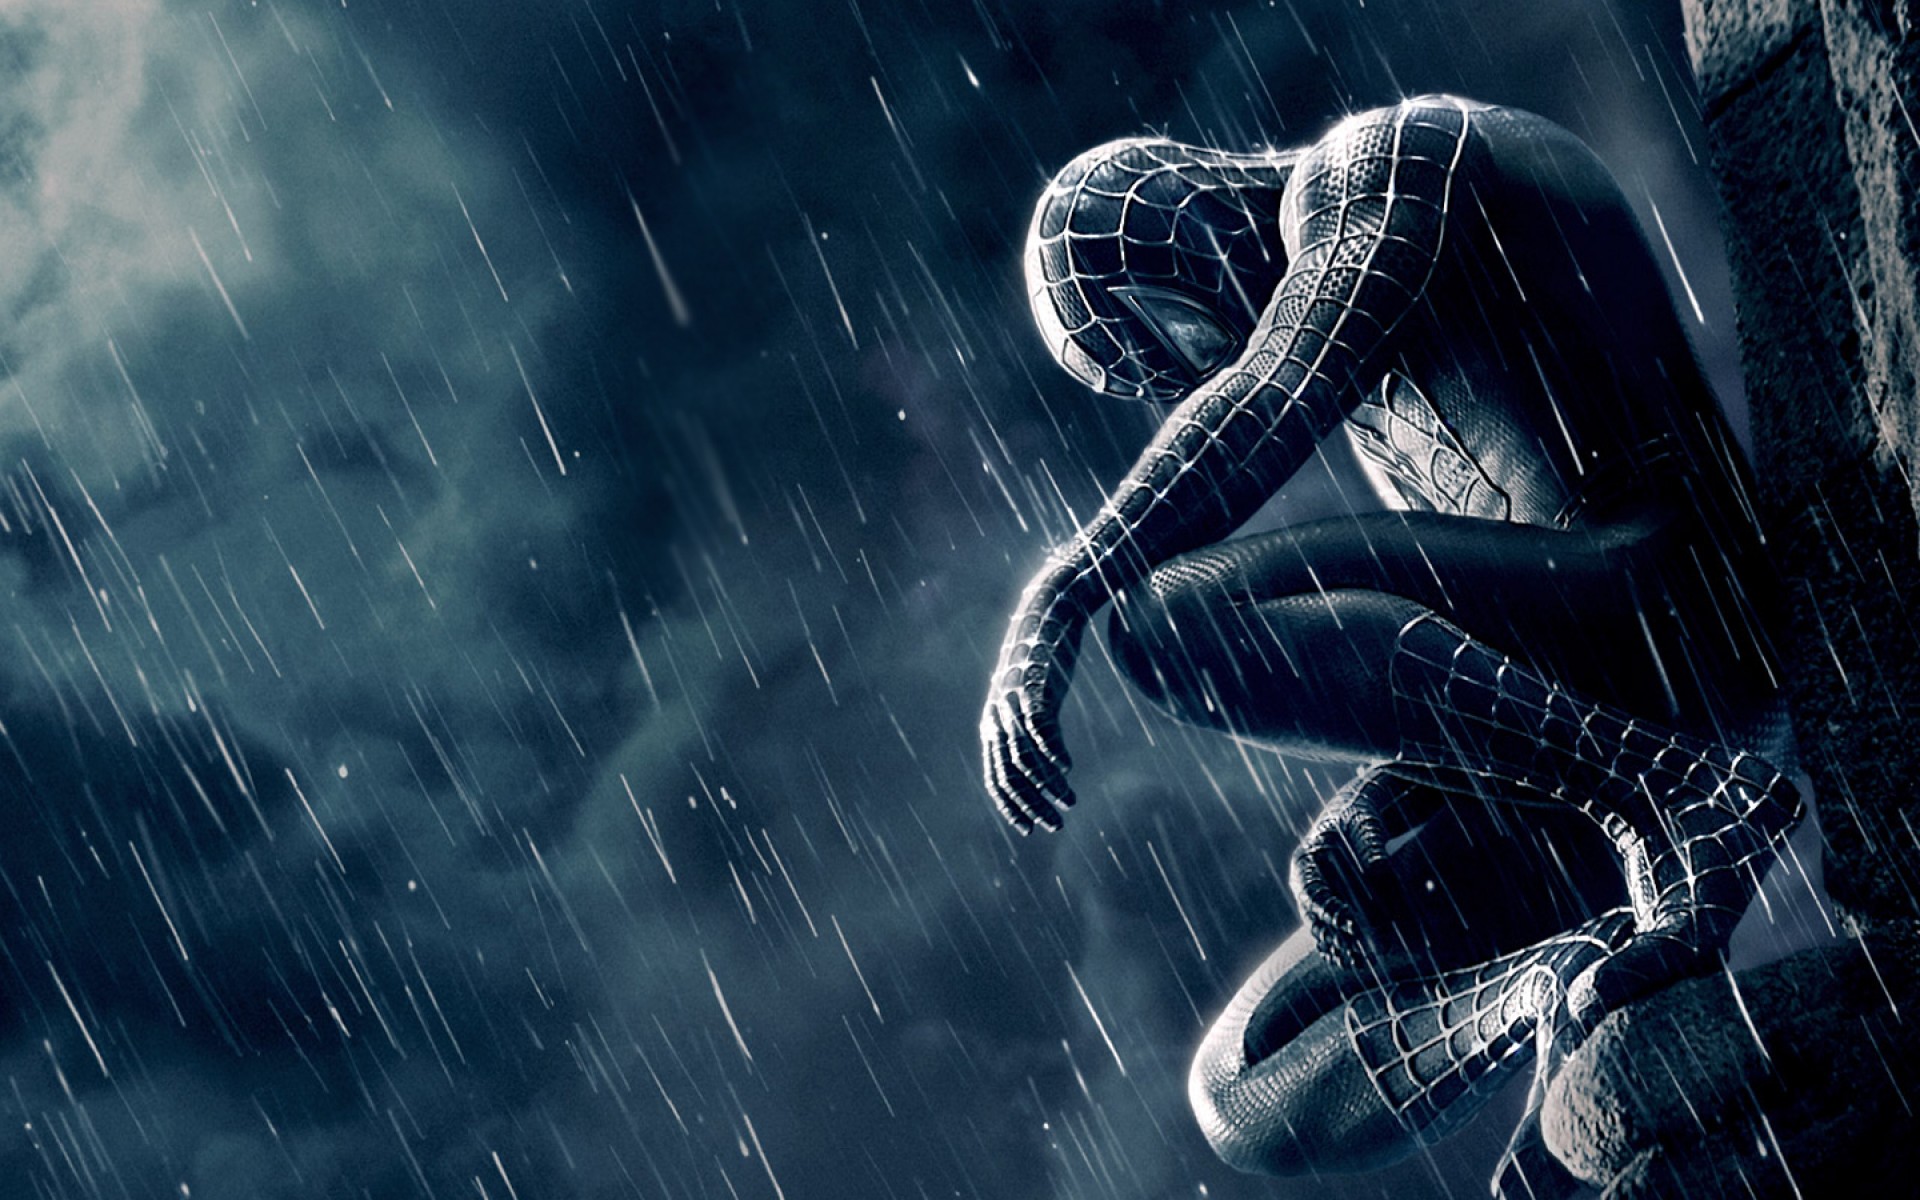 Black Spiderman Wallpaper 1080p - Uncalke.com